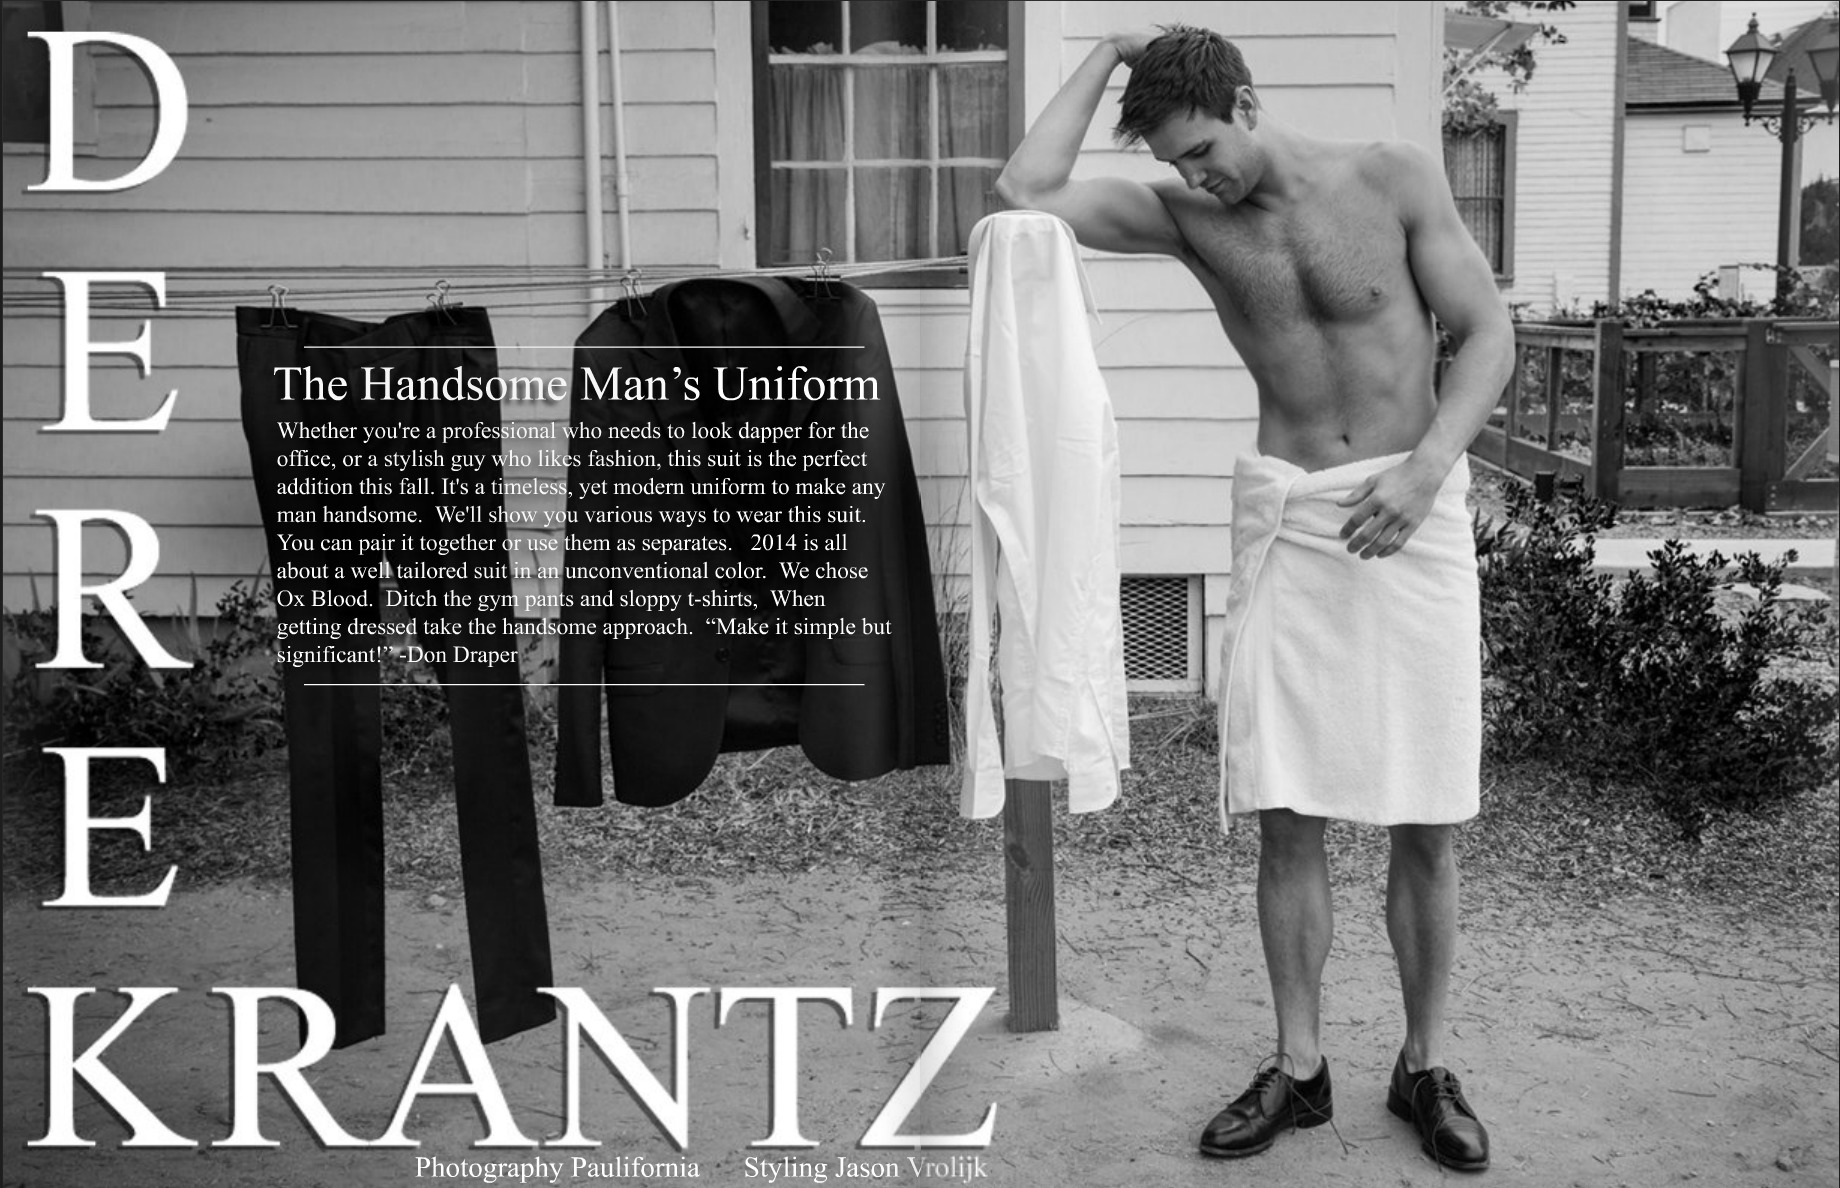 Bridget Marie Magazine. 'The Handsome Man's Uniform'